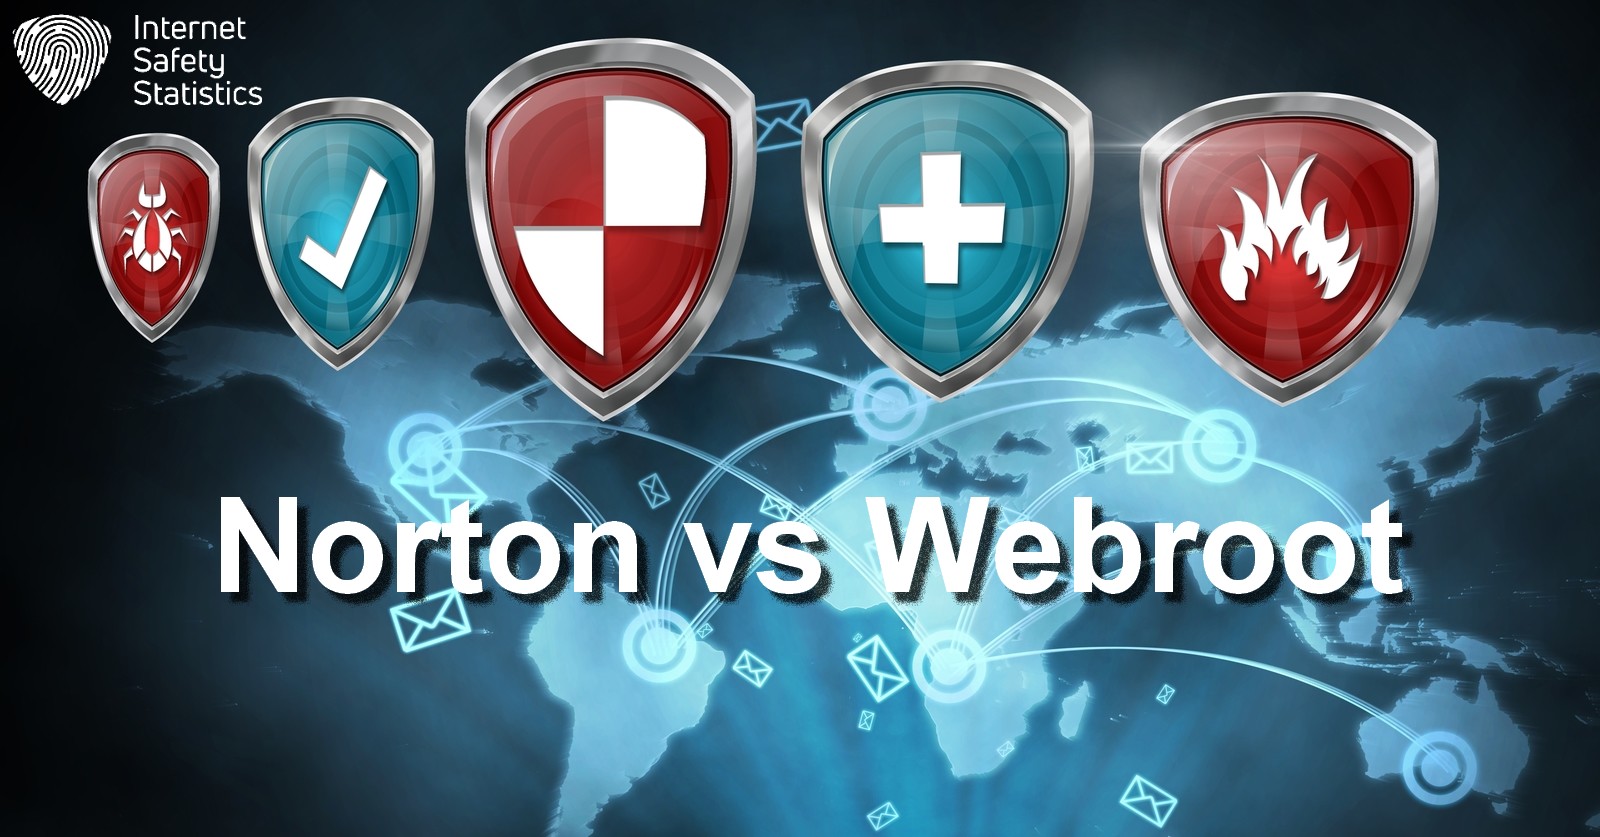 Norton vs Webroot: Antivirus Review to Choose the Best Agent